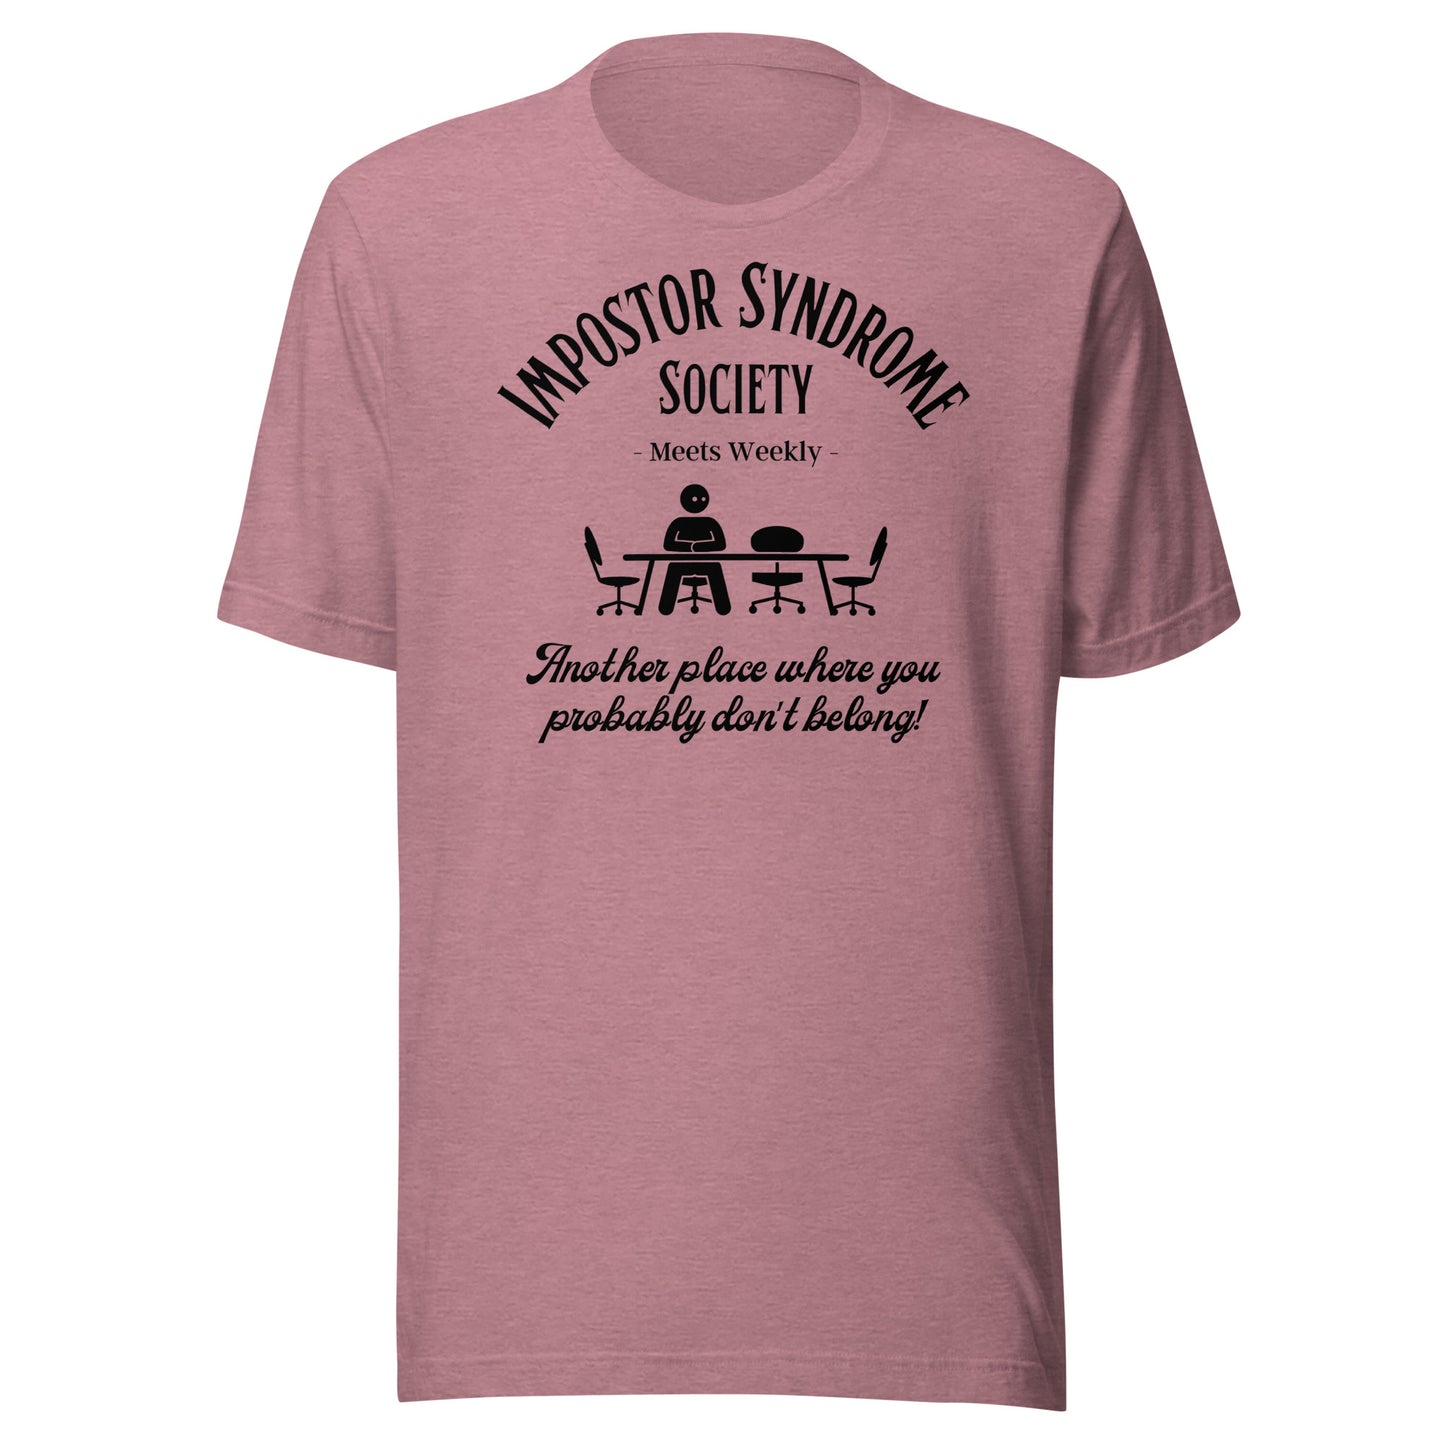 Impostor Syndrome Society Unisex t-shirt